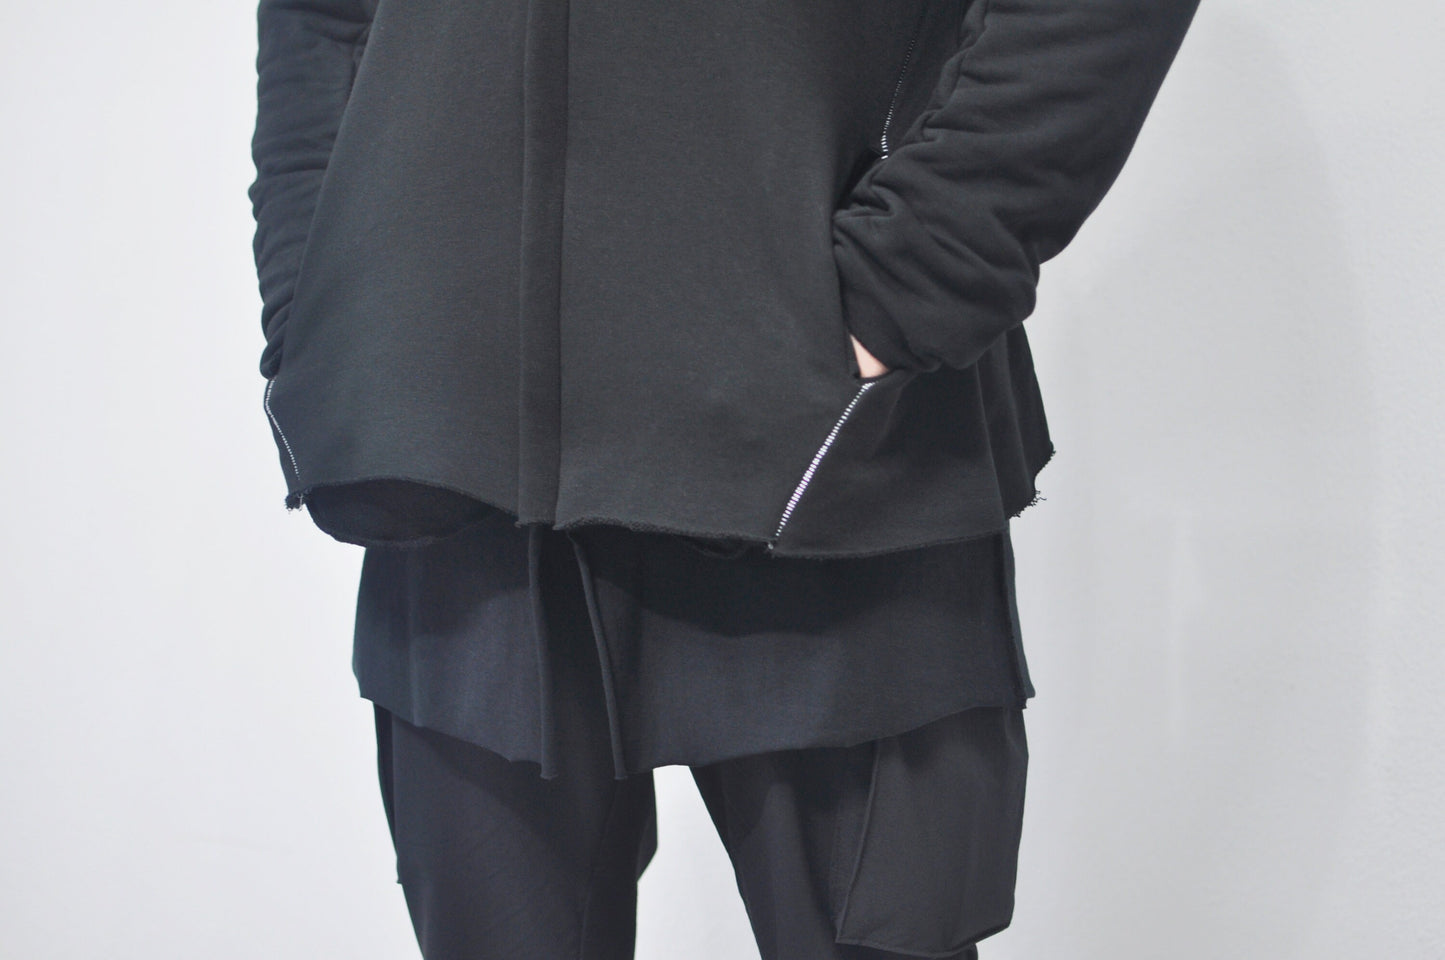 XS-8XL Men's Black Contrast Stitch Boxyfit Cotton Layer FullZip Jacket Sweater ,Side Slit Hoodie, Ashassin Cyber Steampunk Pullover- BB0103